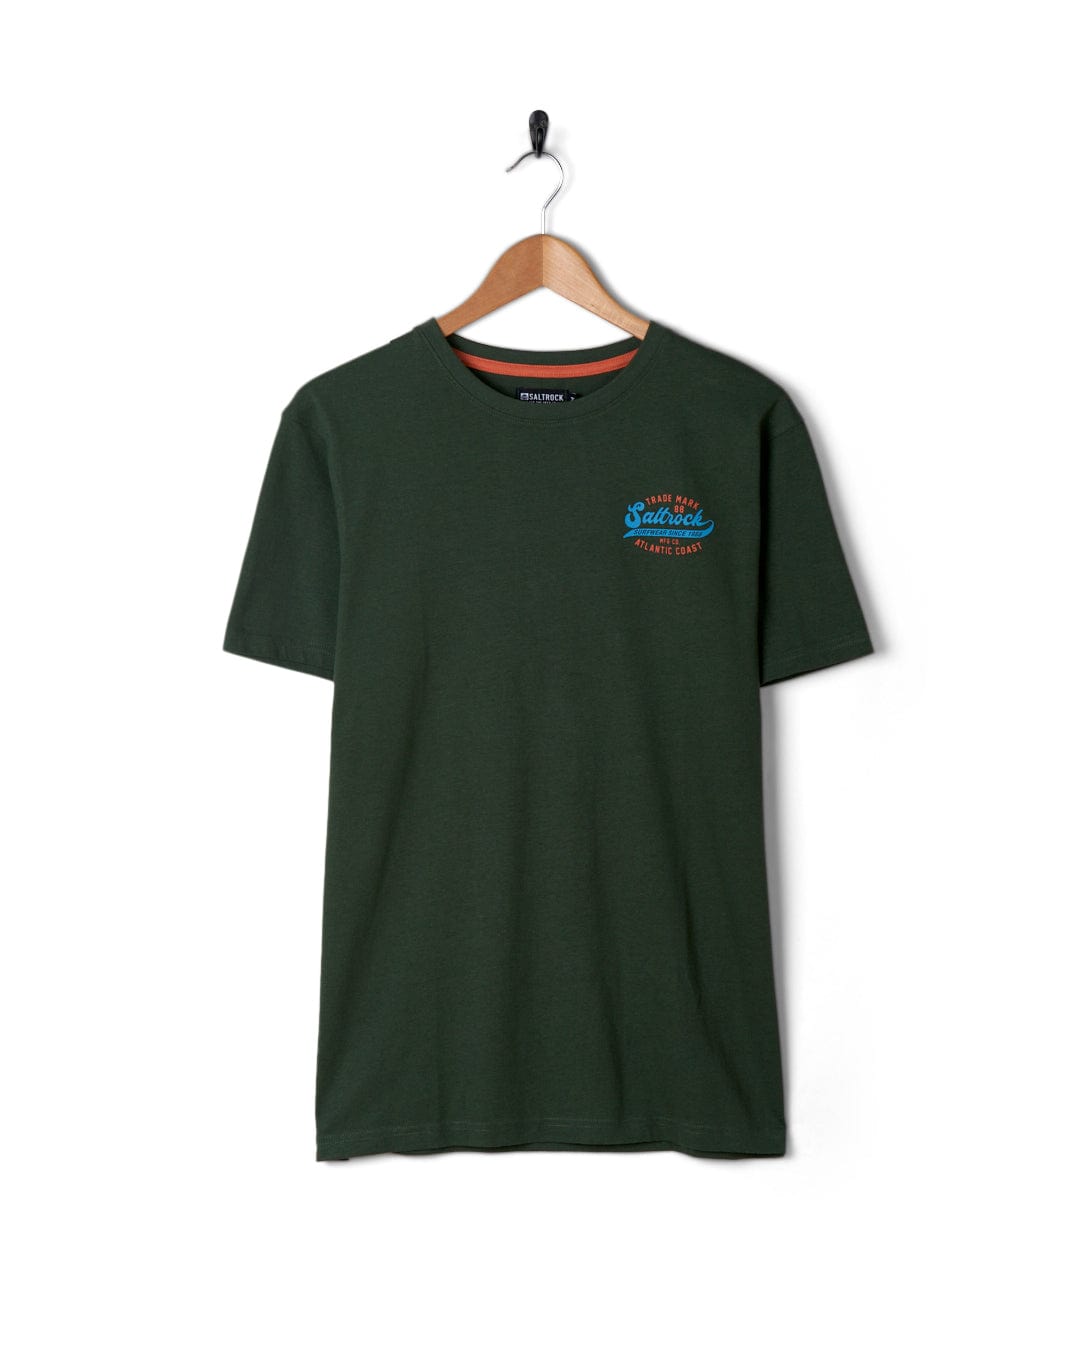 A Home Run - Mens Short Sleeve T-Shirt - Dark Green with a Saltrock logo in orange.